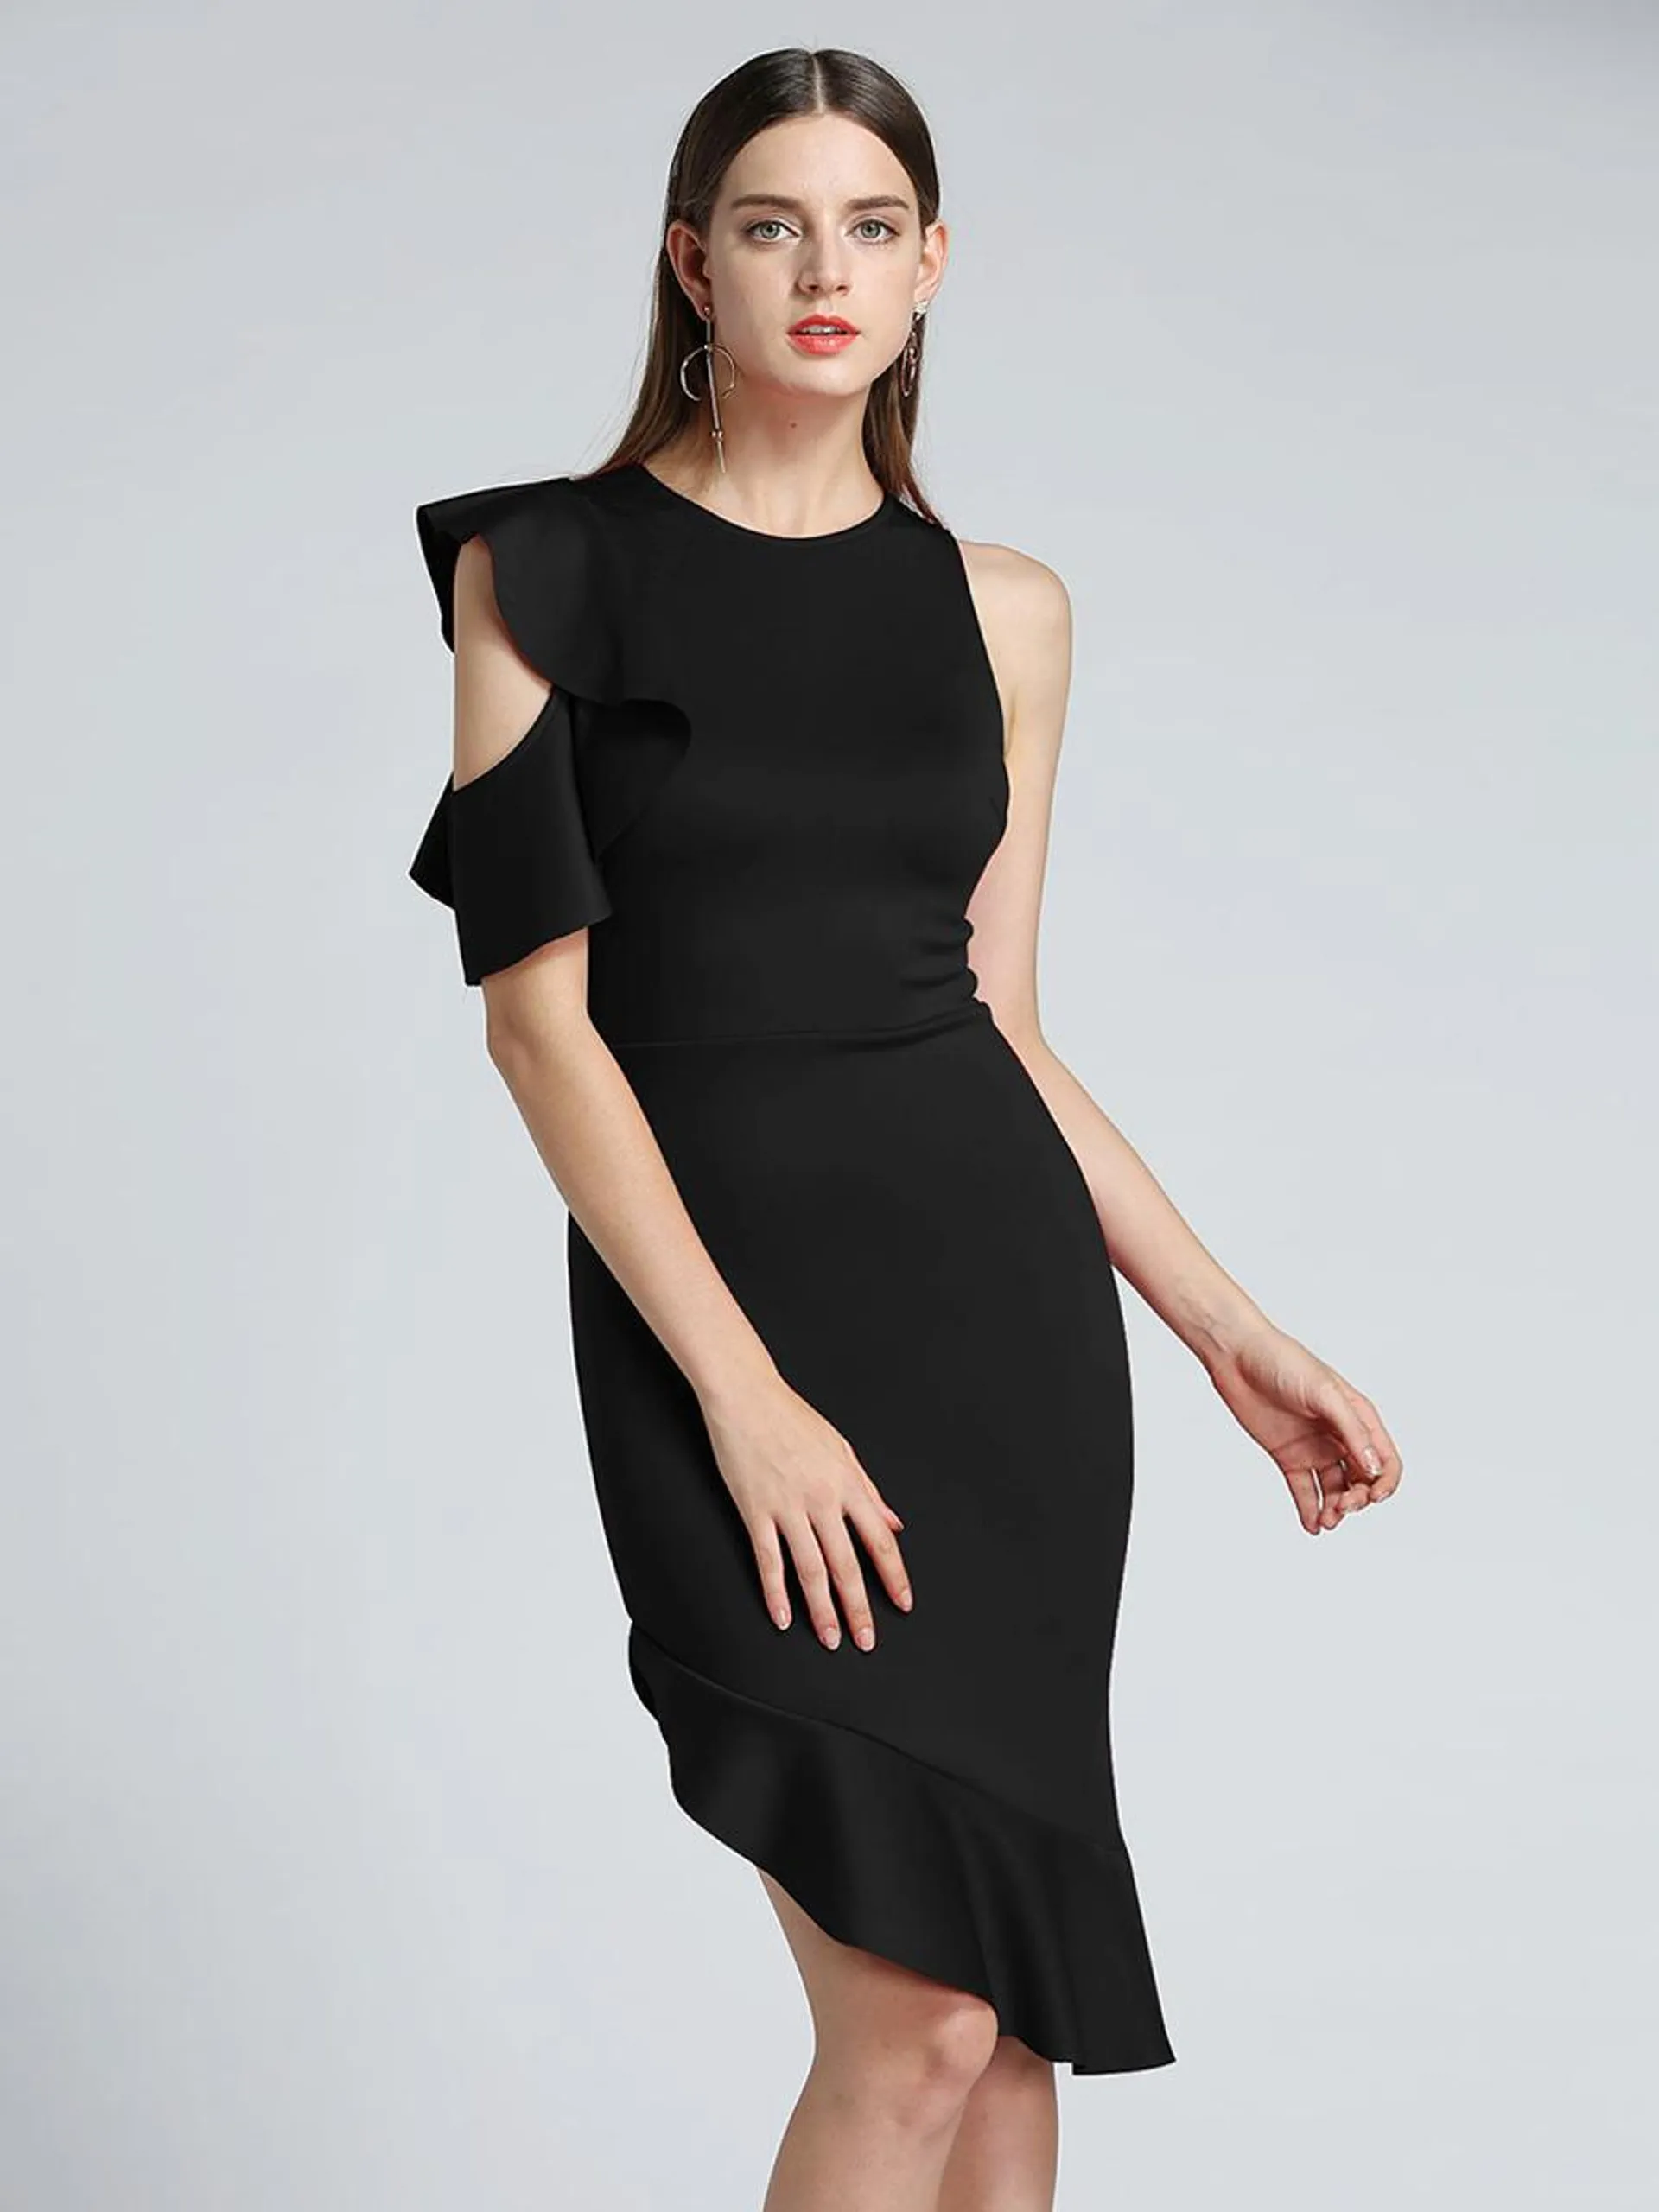 Bodycon Dresses Black Jewel Neck Ruffles Chic Short Sleeves Pencil Dress